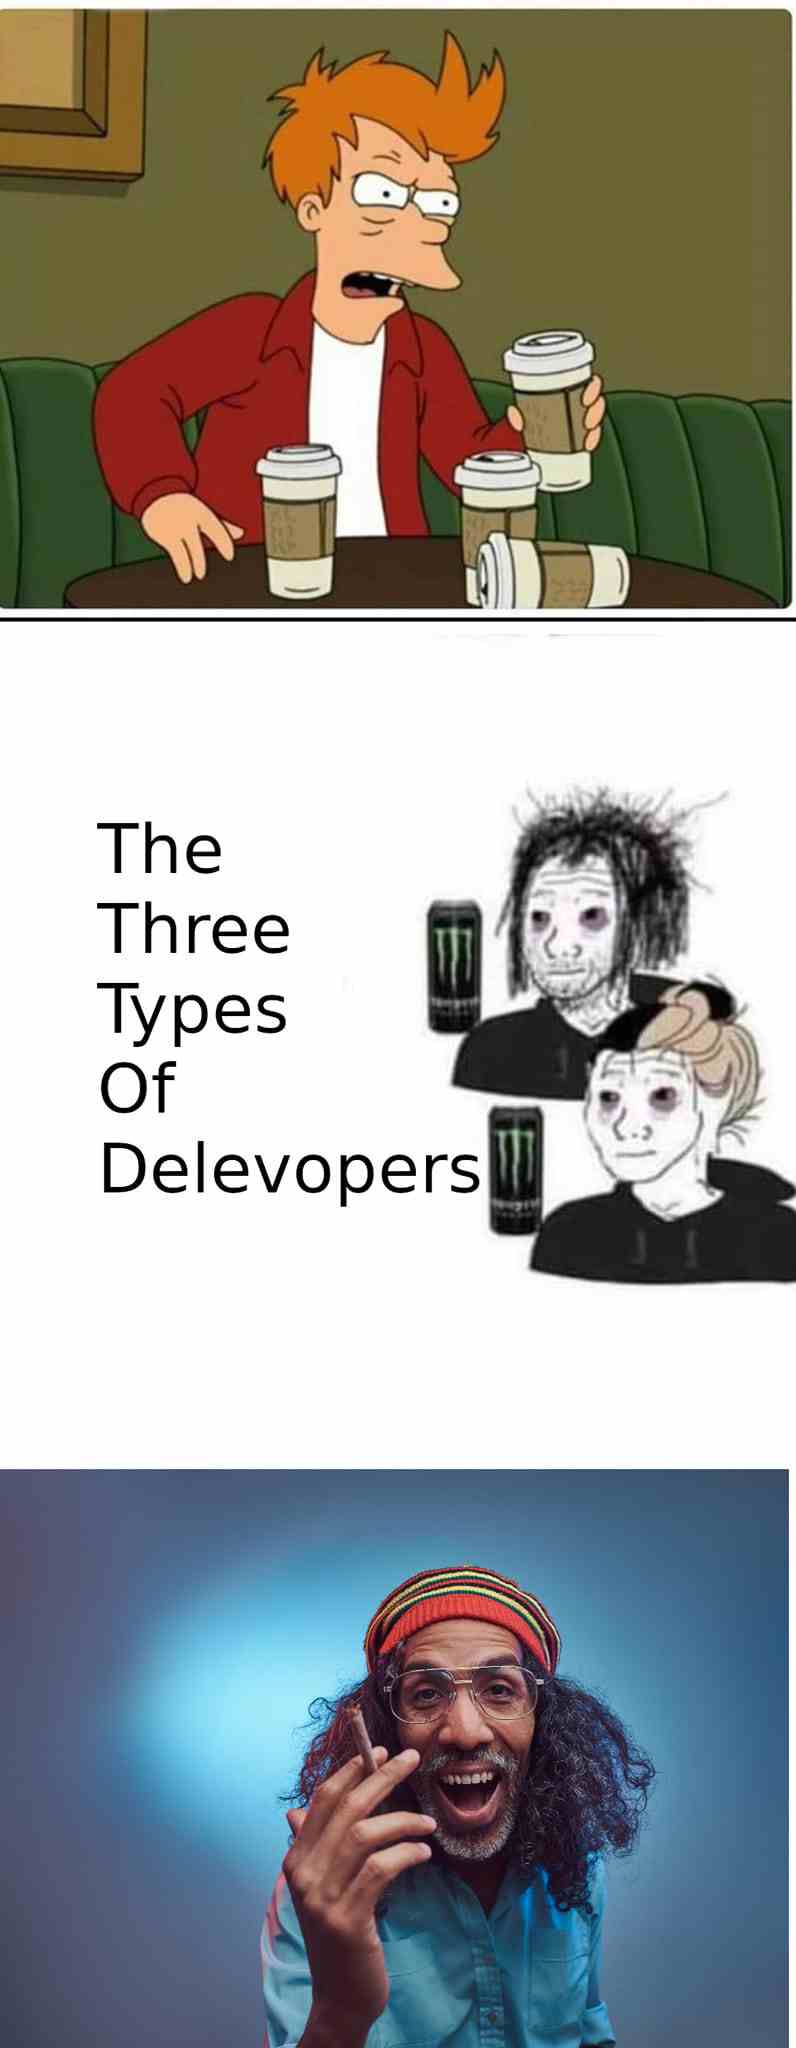 Three Types of Developersz